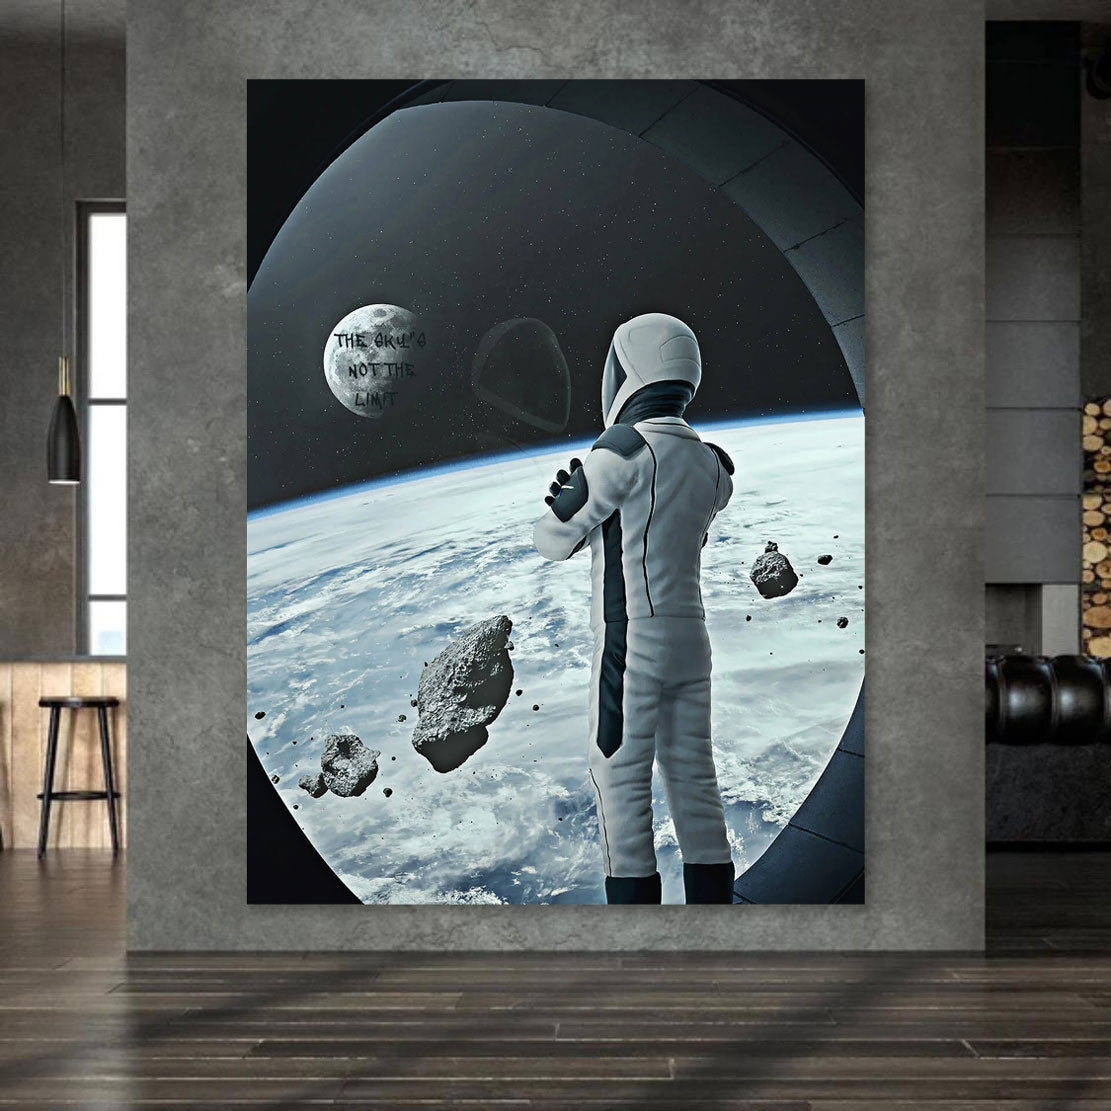 Waltkarte &amp; Weltraum Wandbilder in schwarz grau auf Leinwand 